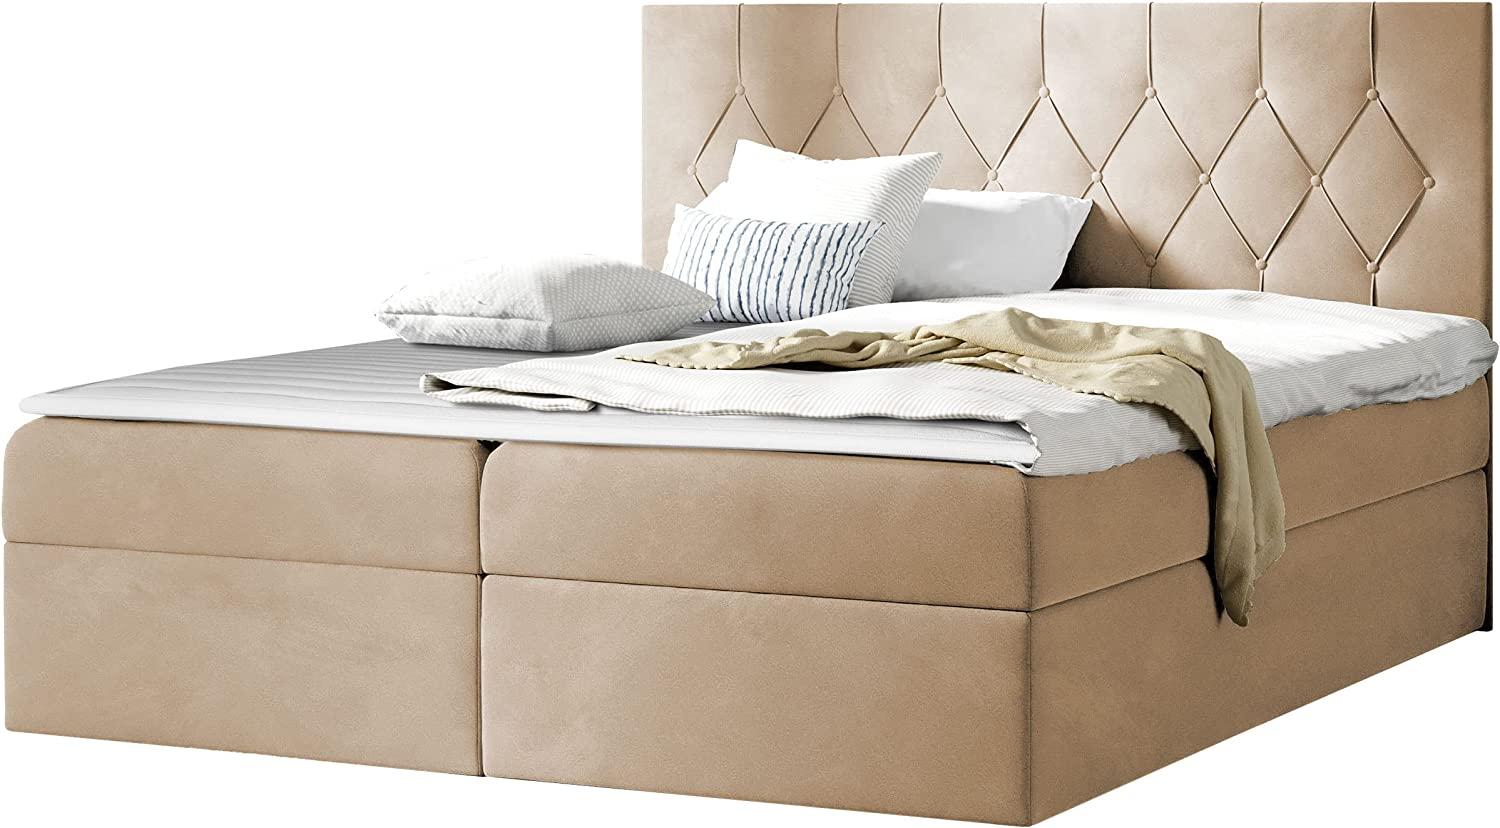 Mirjan24 'Simori' Boxspringbett mit Bettkasten, Matratze & Topper, Stoff beige, 200 x 200 cm Bild 1